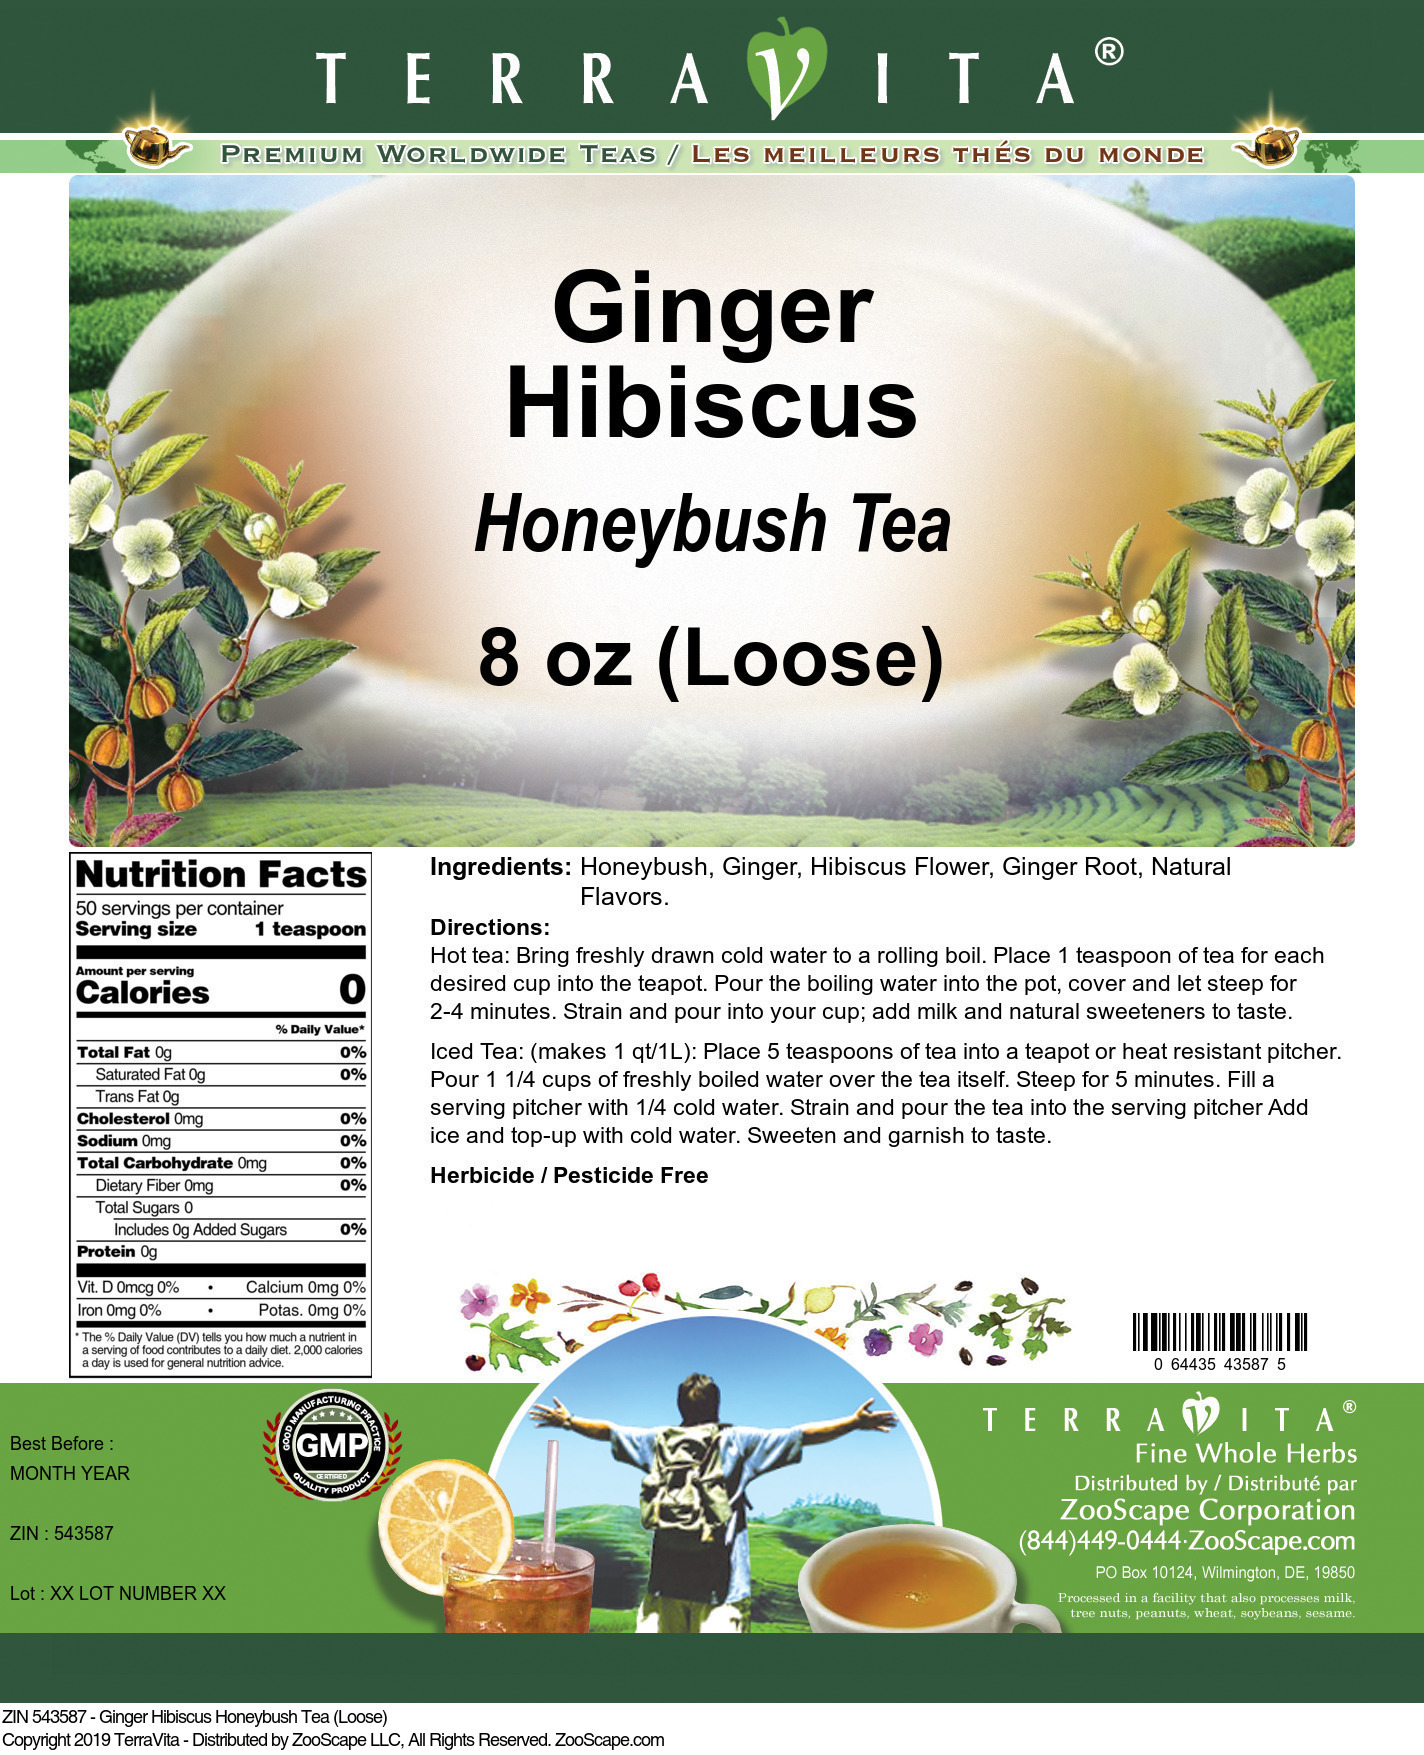 Ginger Hibiscus Honeybush Tea (Loose) - Label